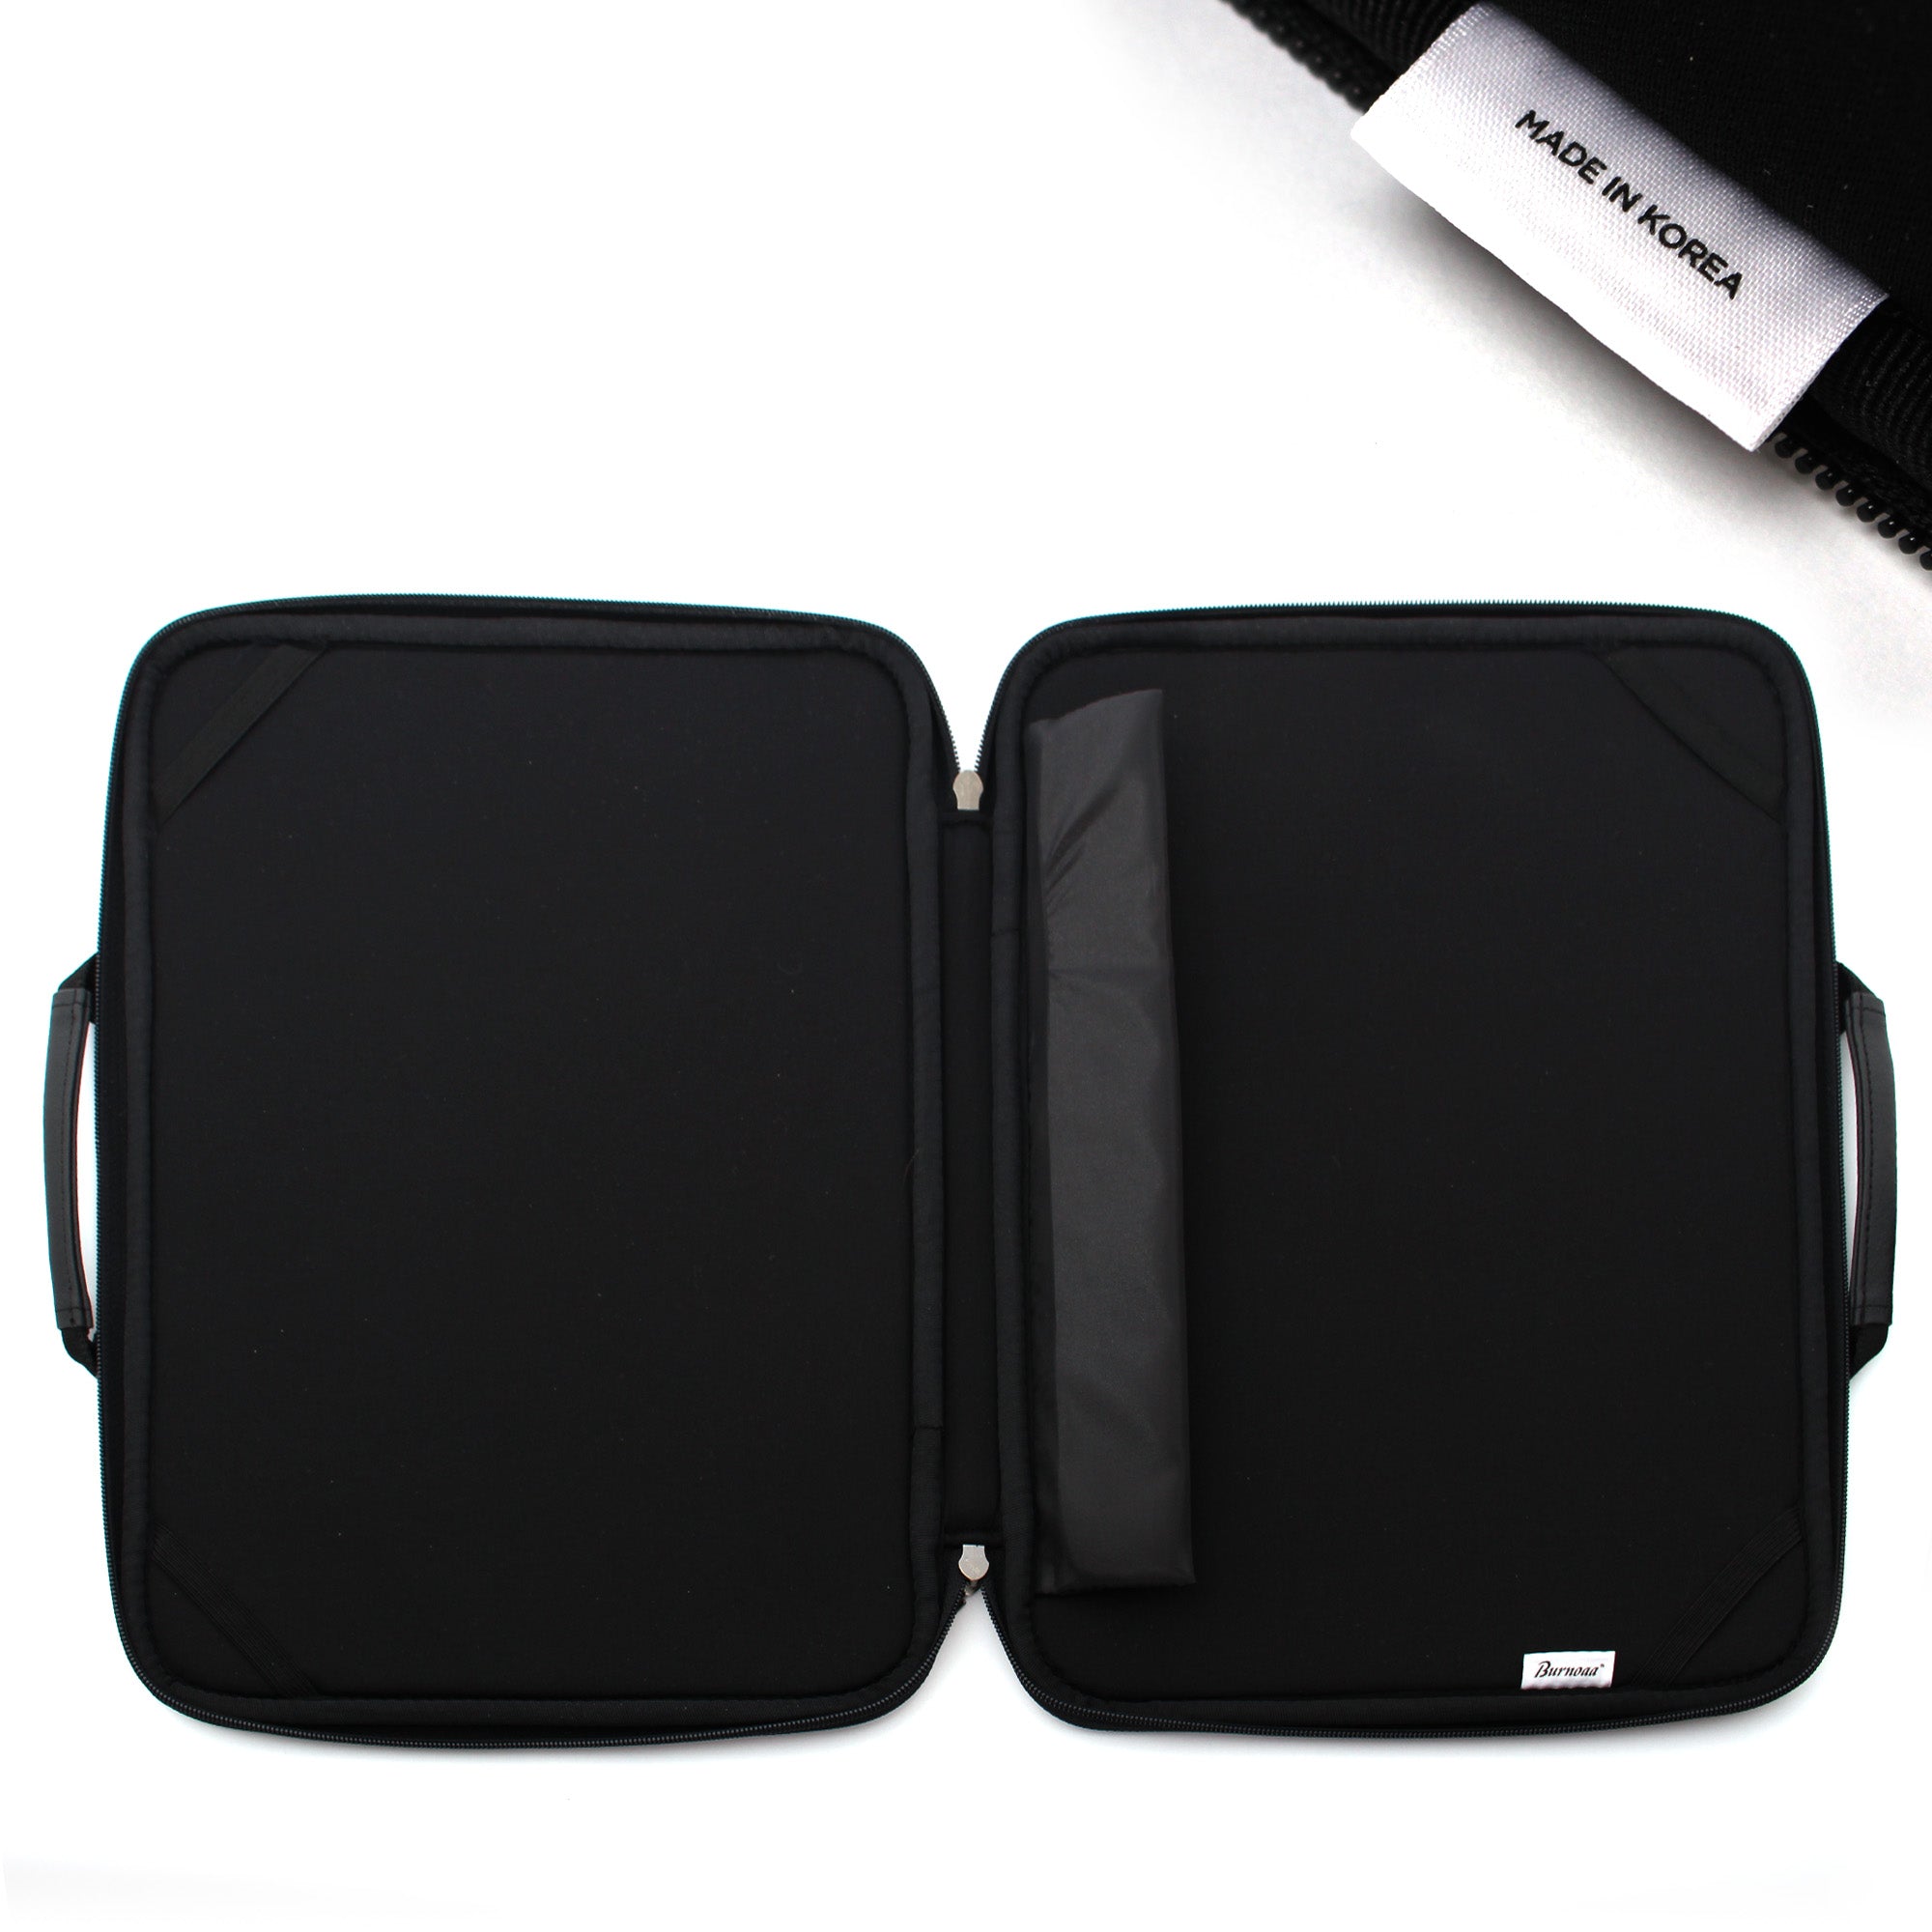 Burnoaa 11.6 Inch Memory Foam Laptop Case Sleeve (Black)